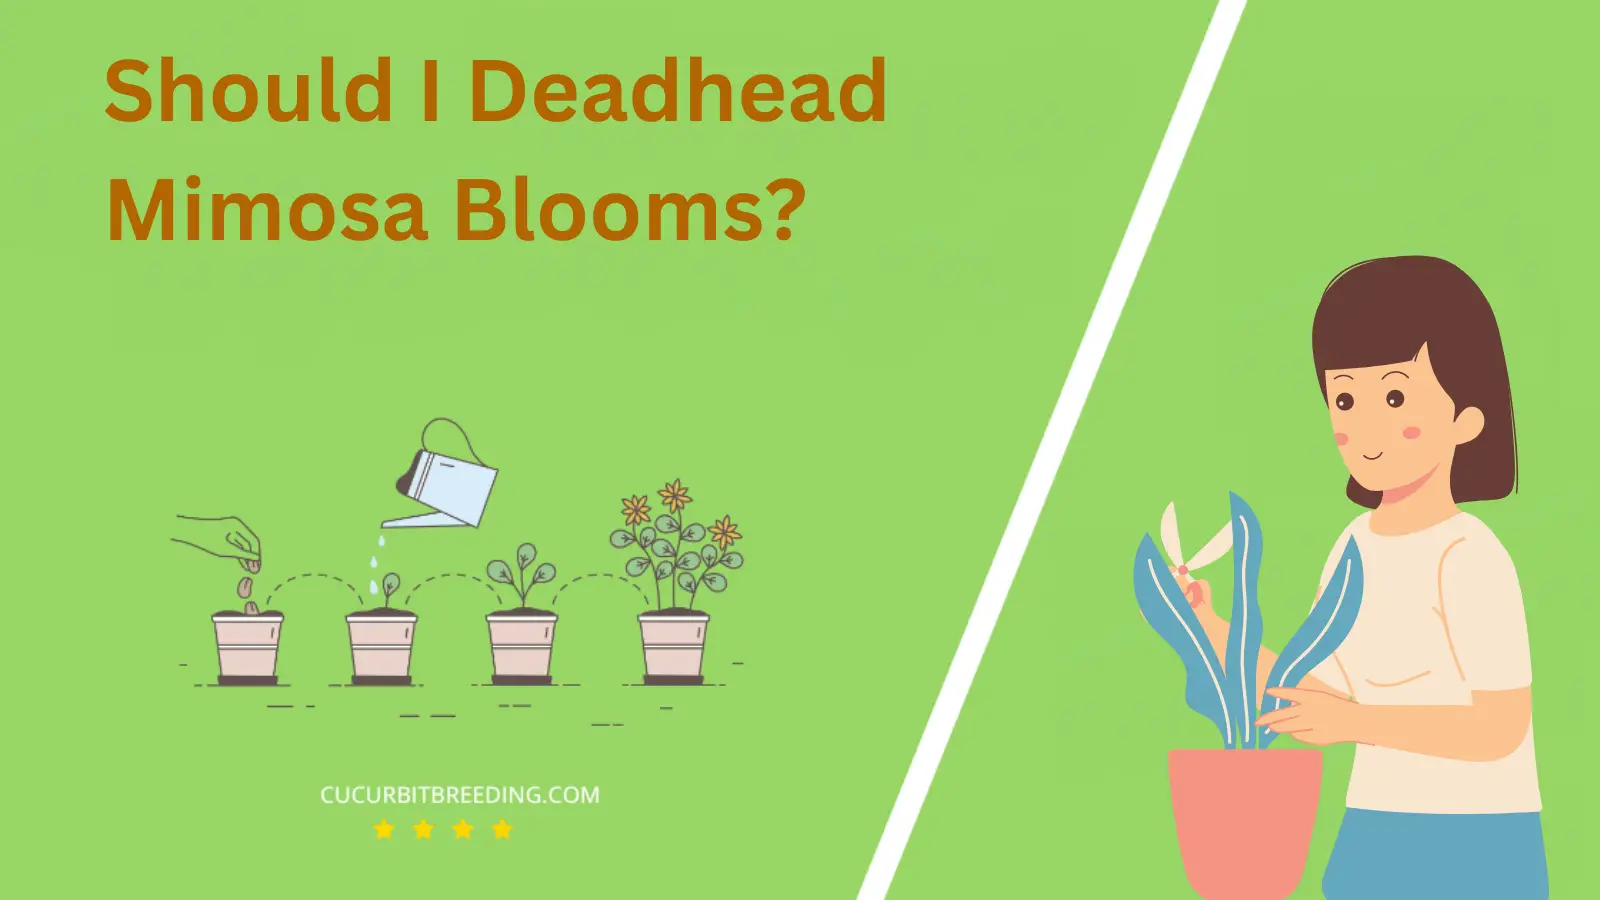 Should I Deadhead Mimosa Blooms?